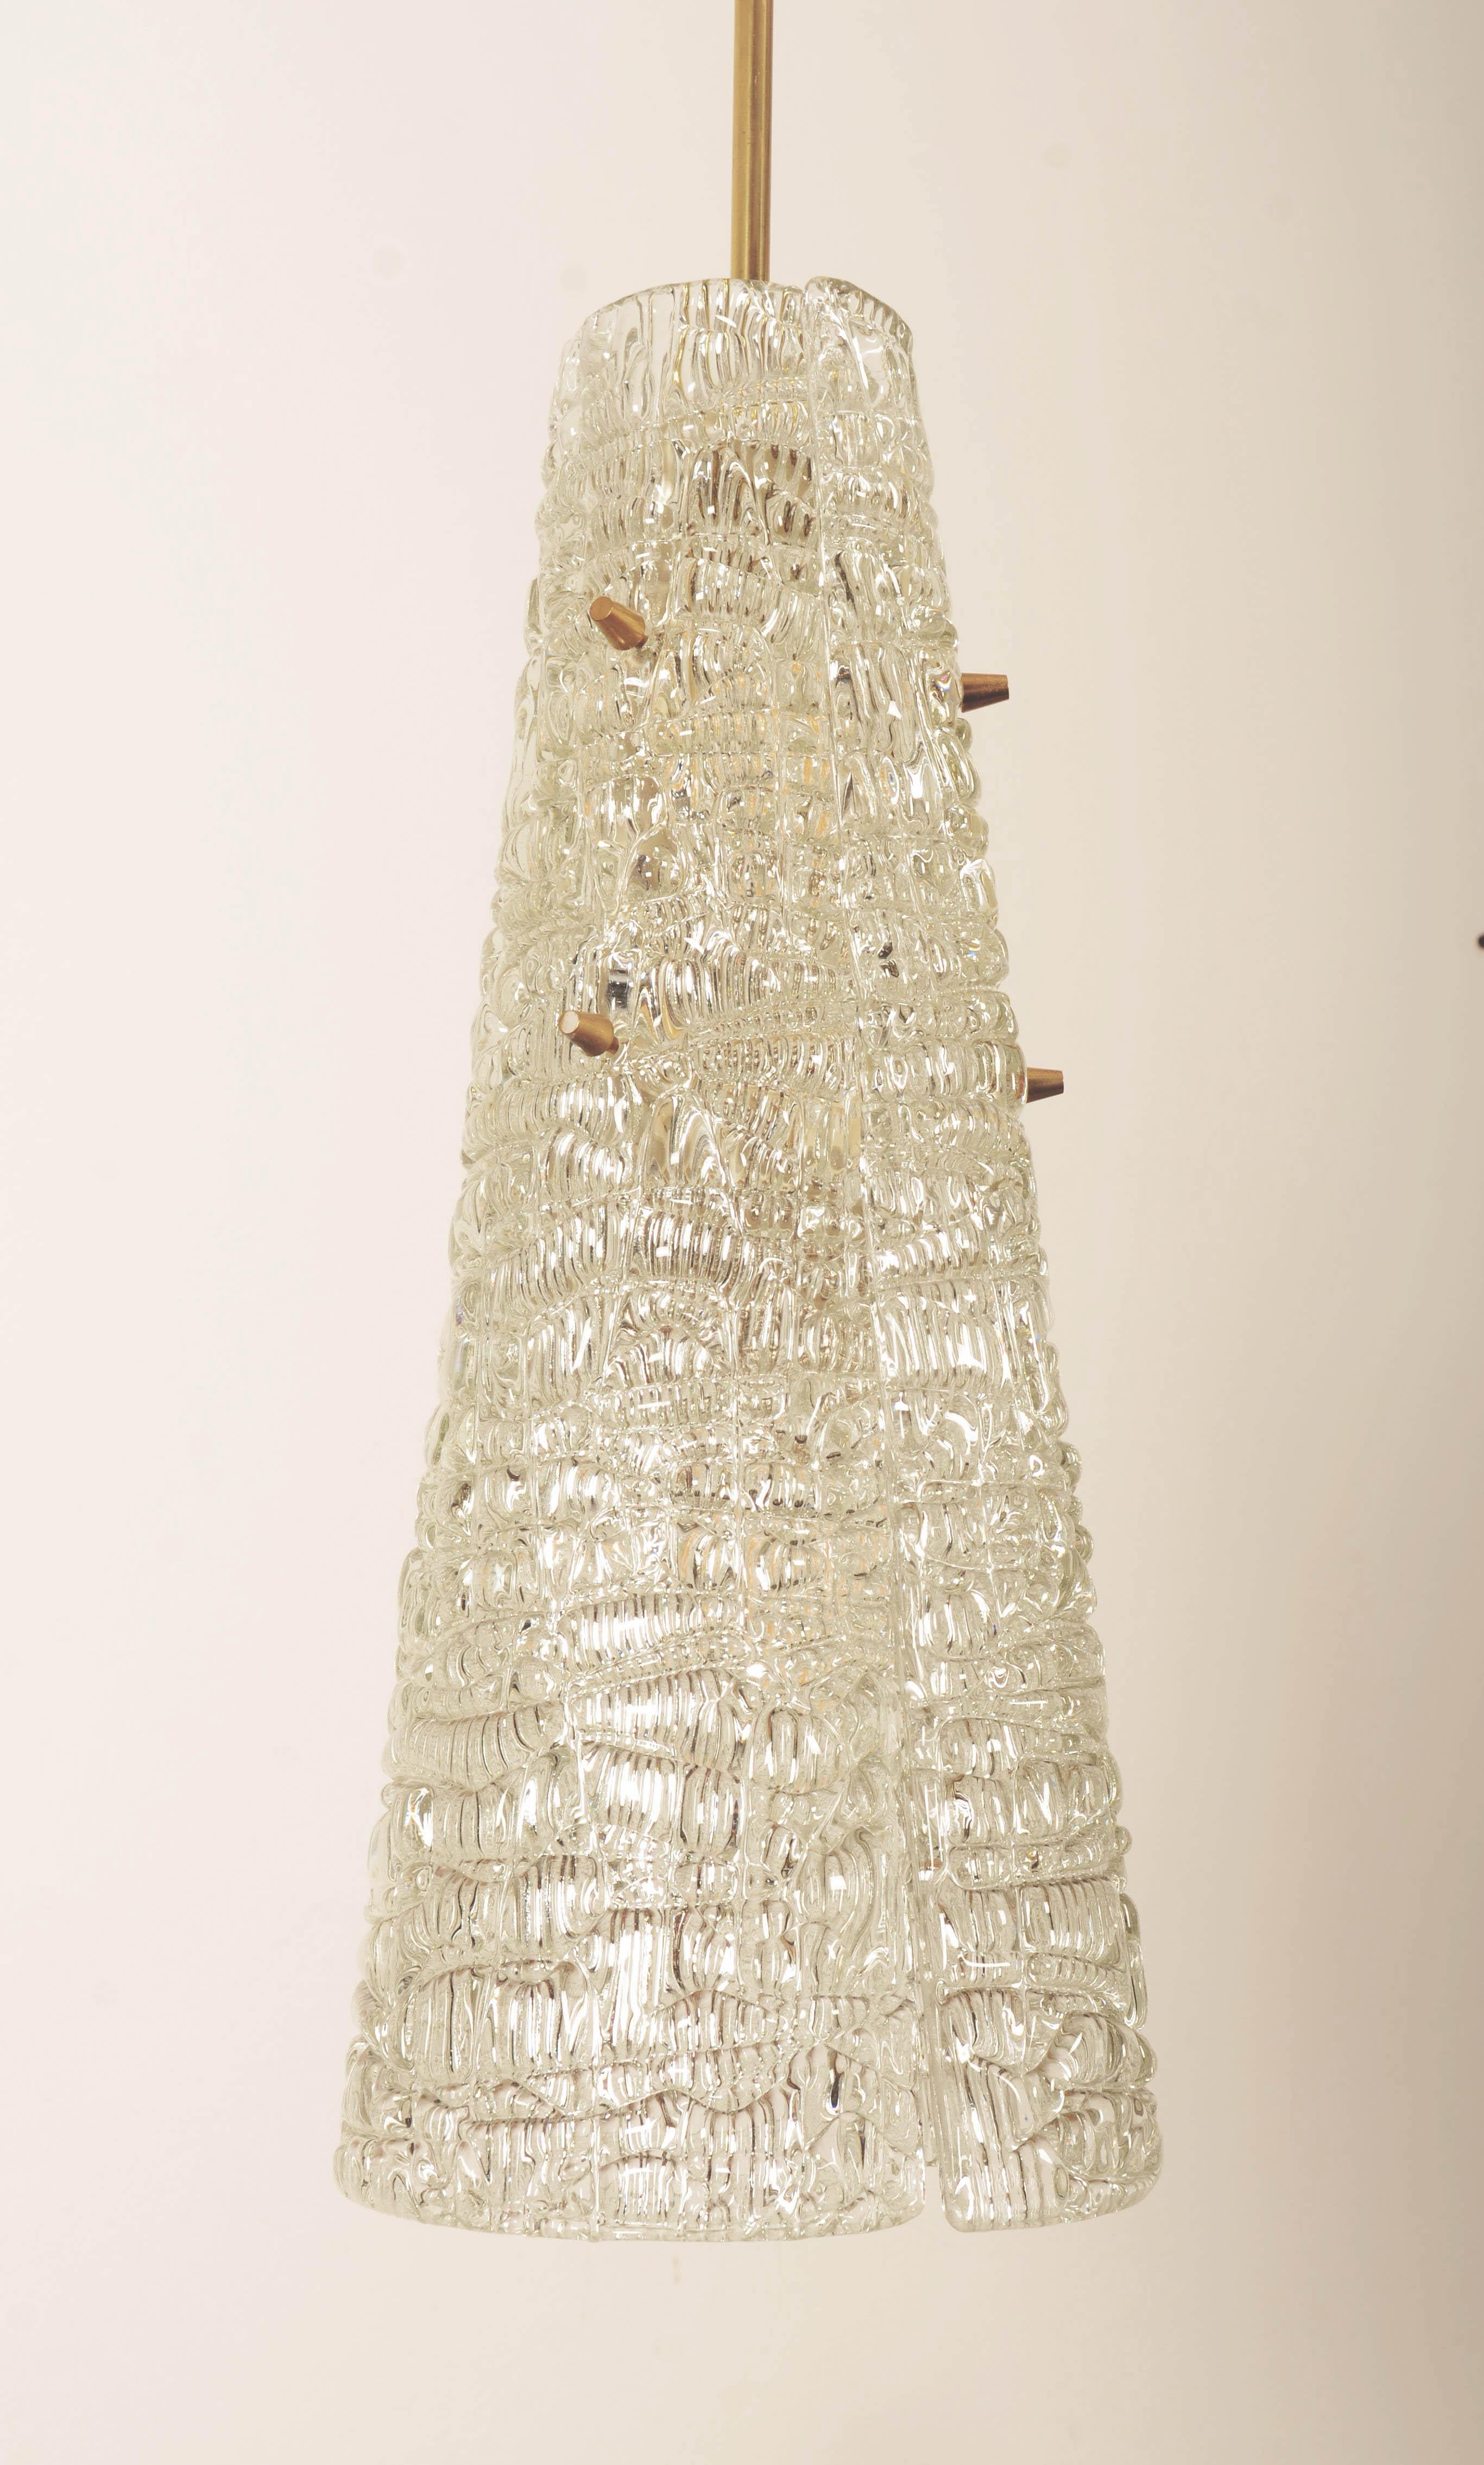 Midcentury J.T. Kalmar Crystal Glass Pendant Lamp For Sale 3